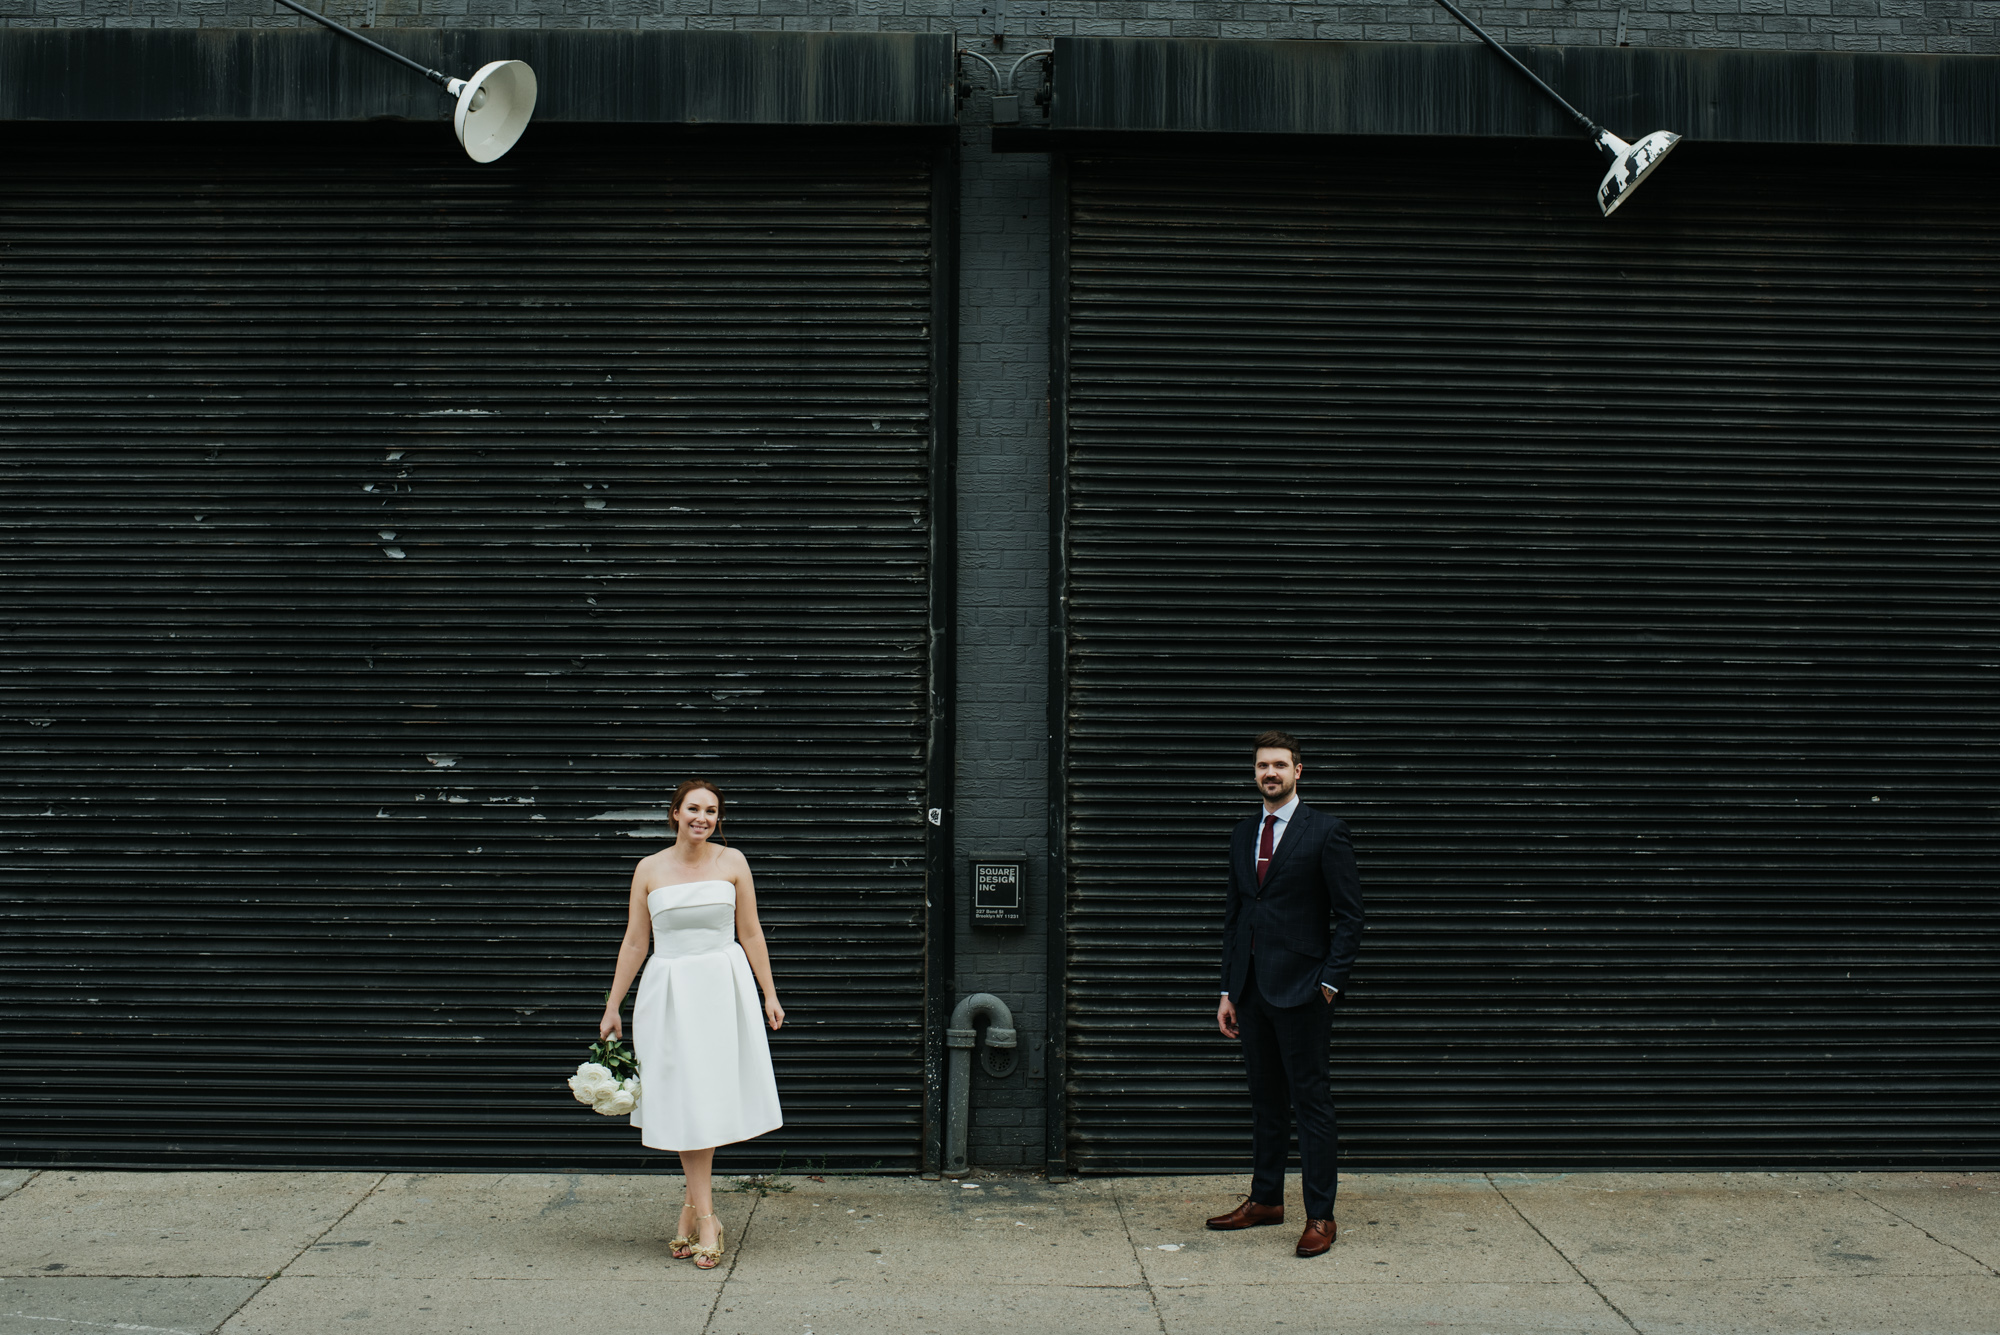 The Green Building, Brooklyn Wedding, Micro Wedding, Covid 19 Wedding